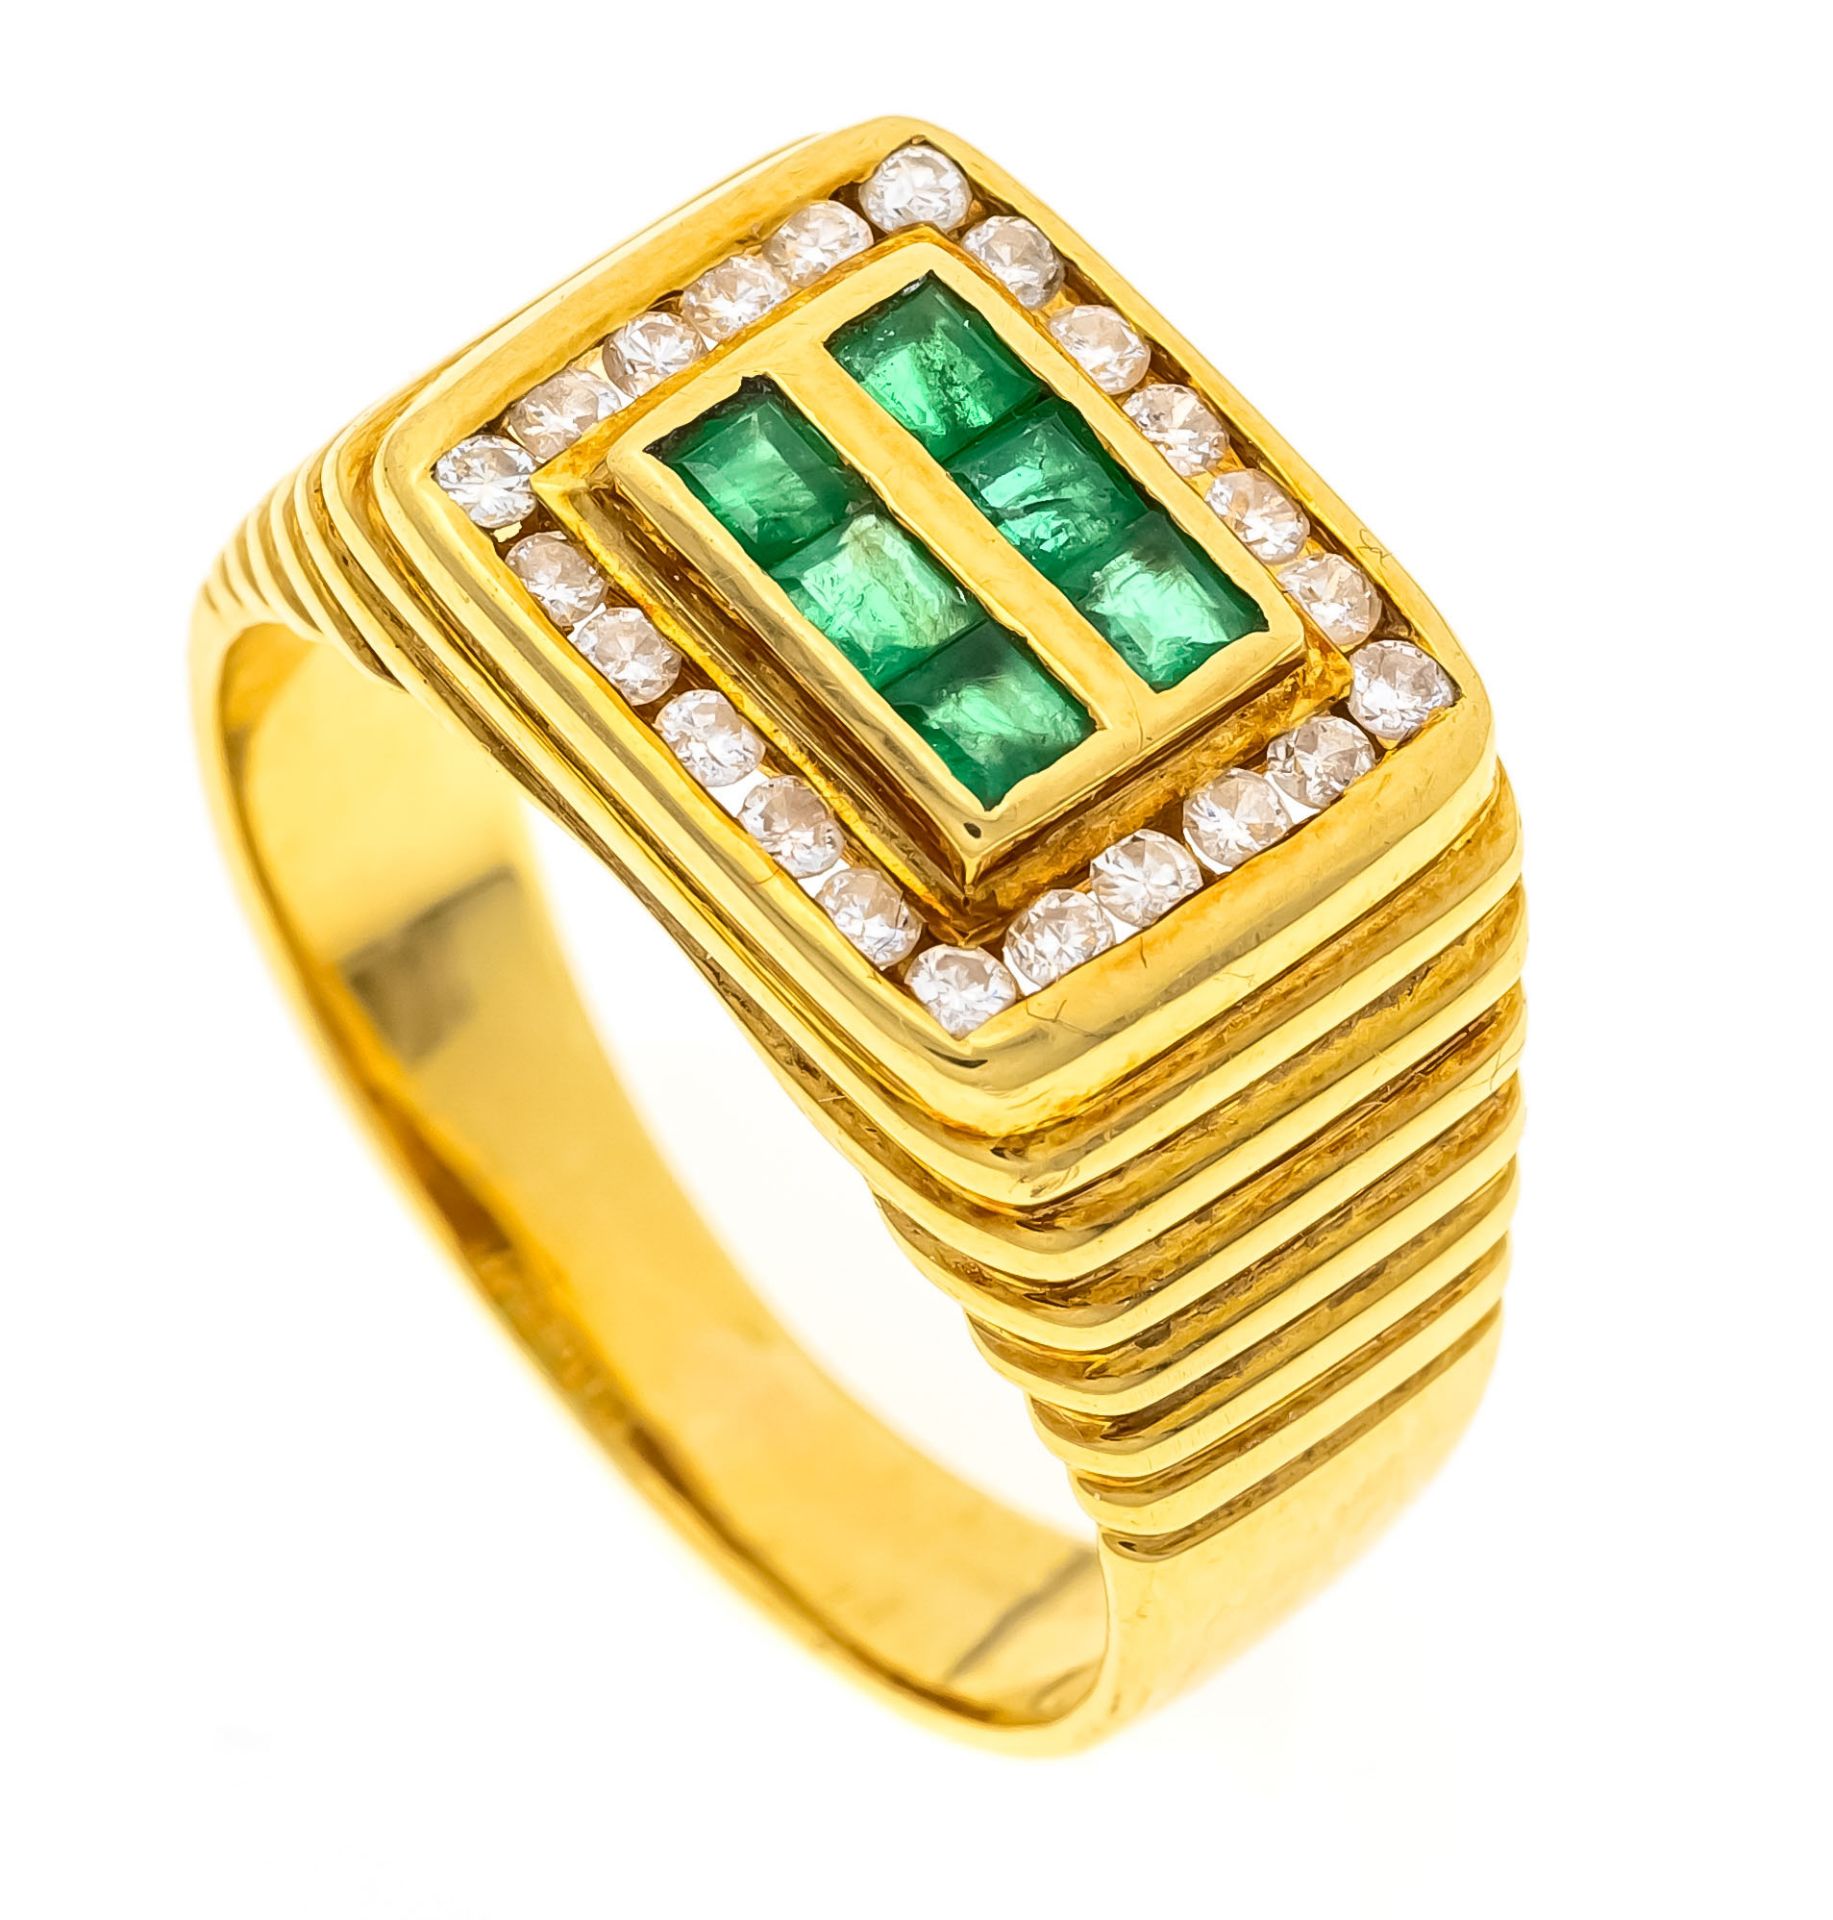 Smaragd-Brillant-Ring GG 750/0